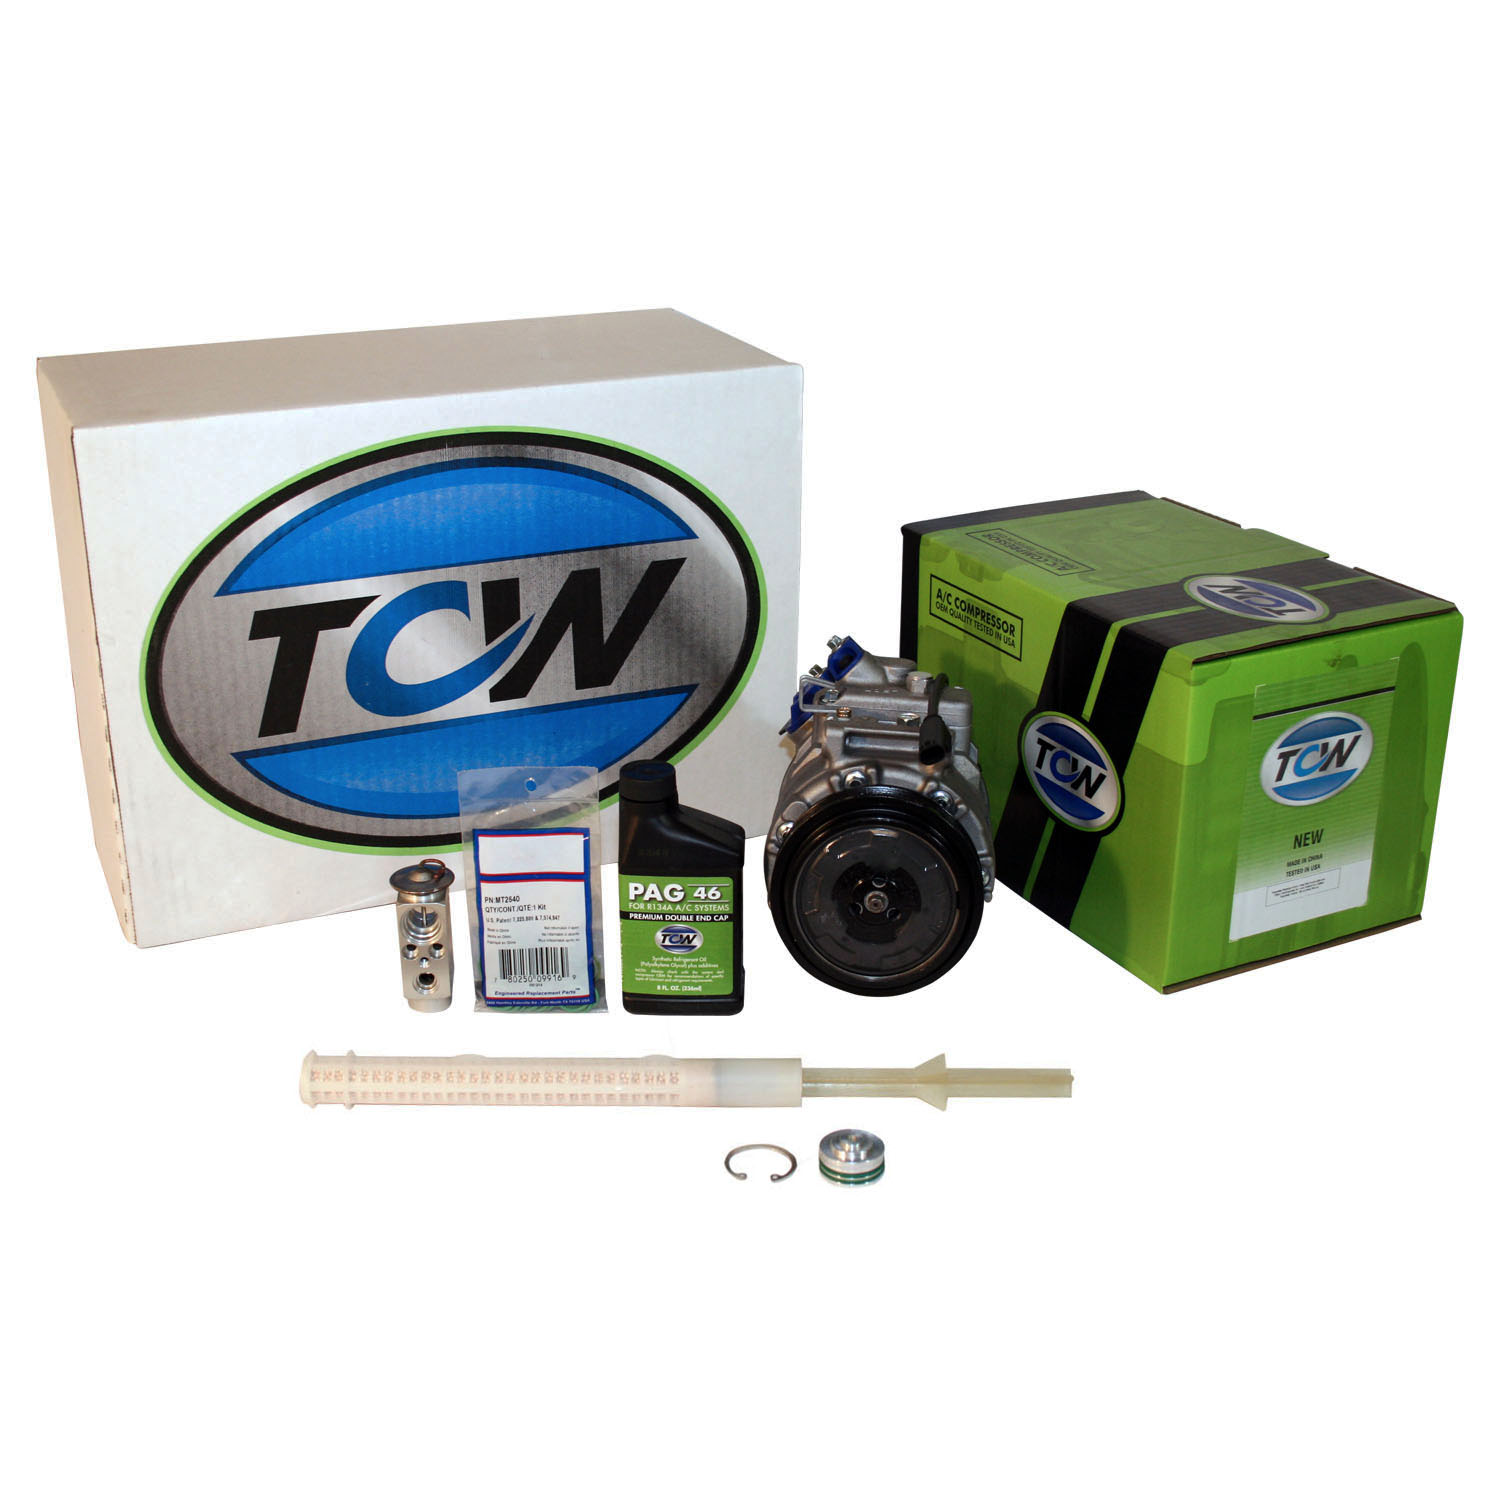 TCW Vehicle A/C Kit K1000430N New Product Image field_60b6a13a6e67c